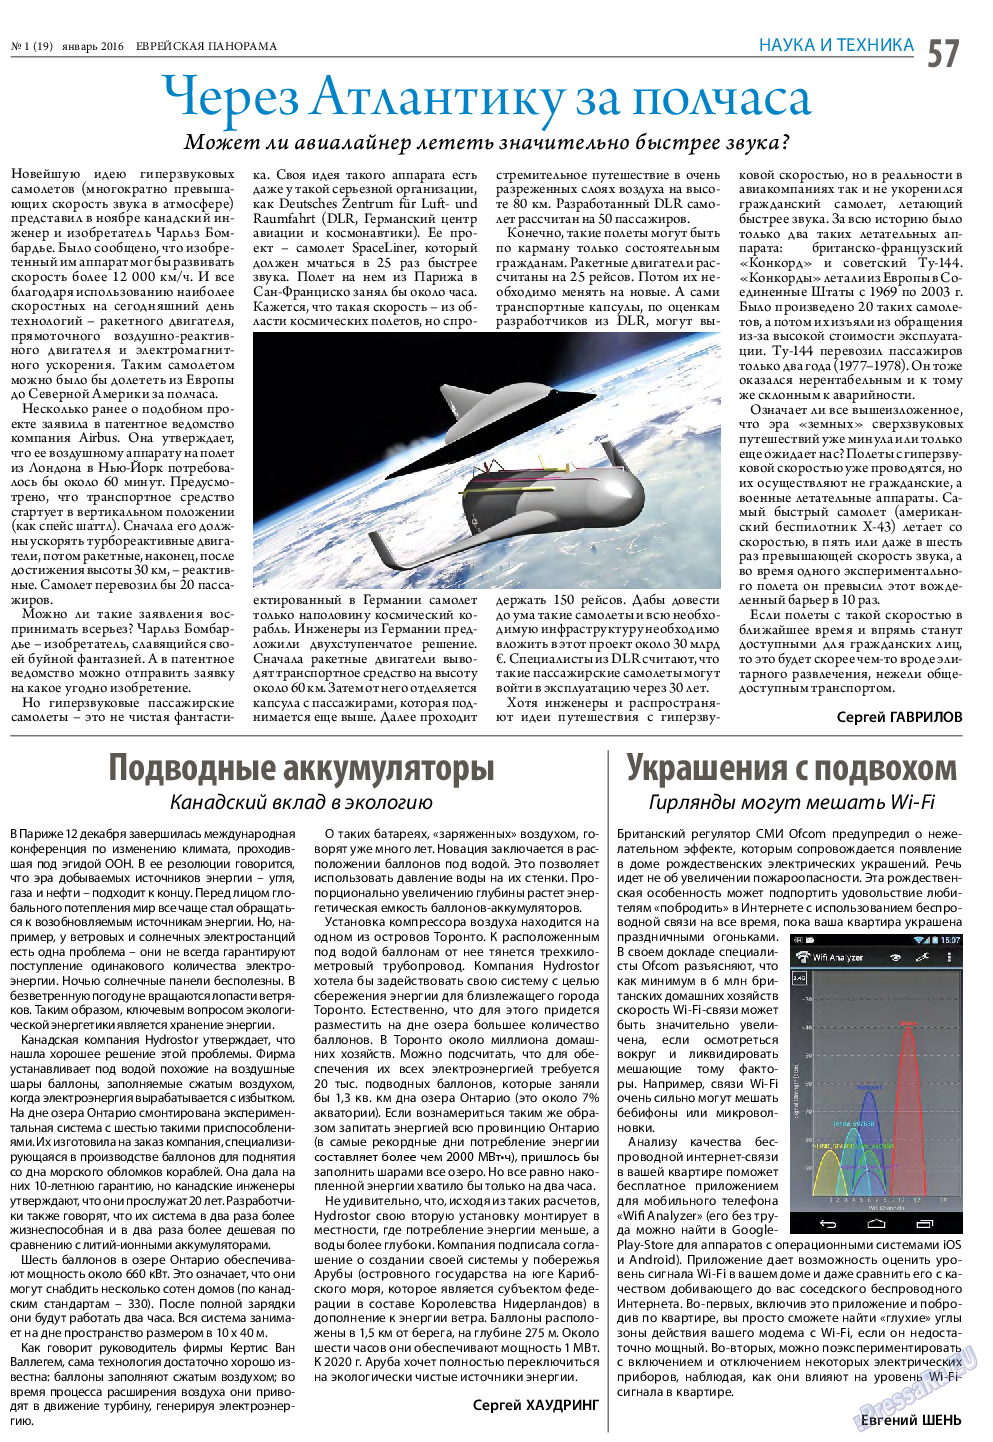 Еврейская панорама, газета. 2016 №1 стр.57